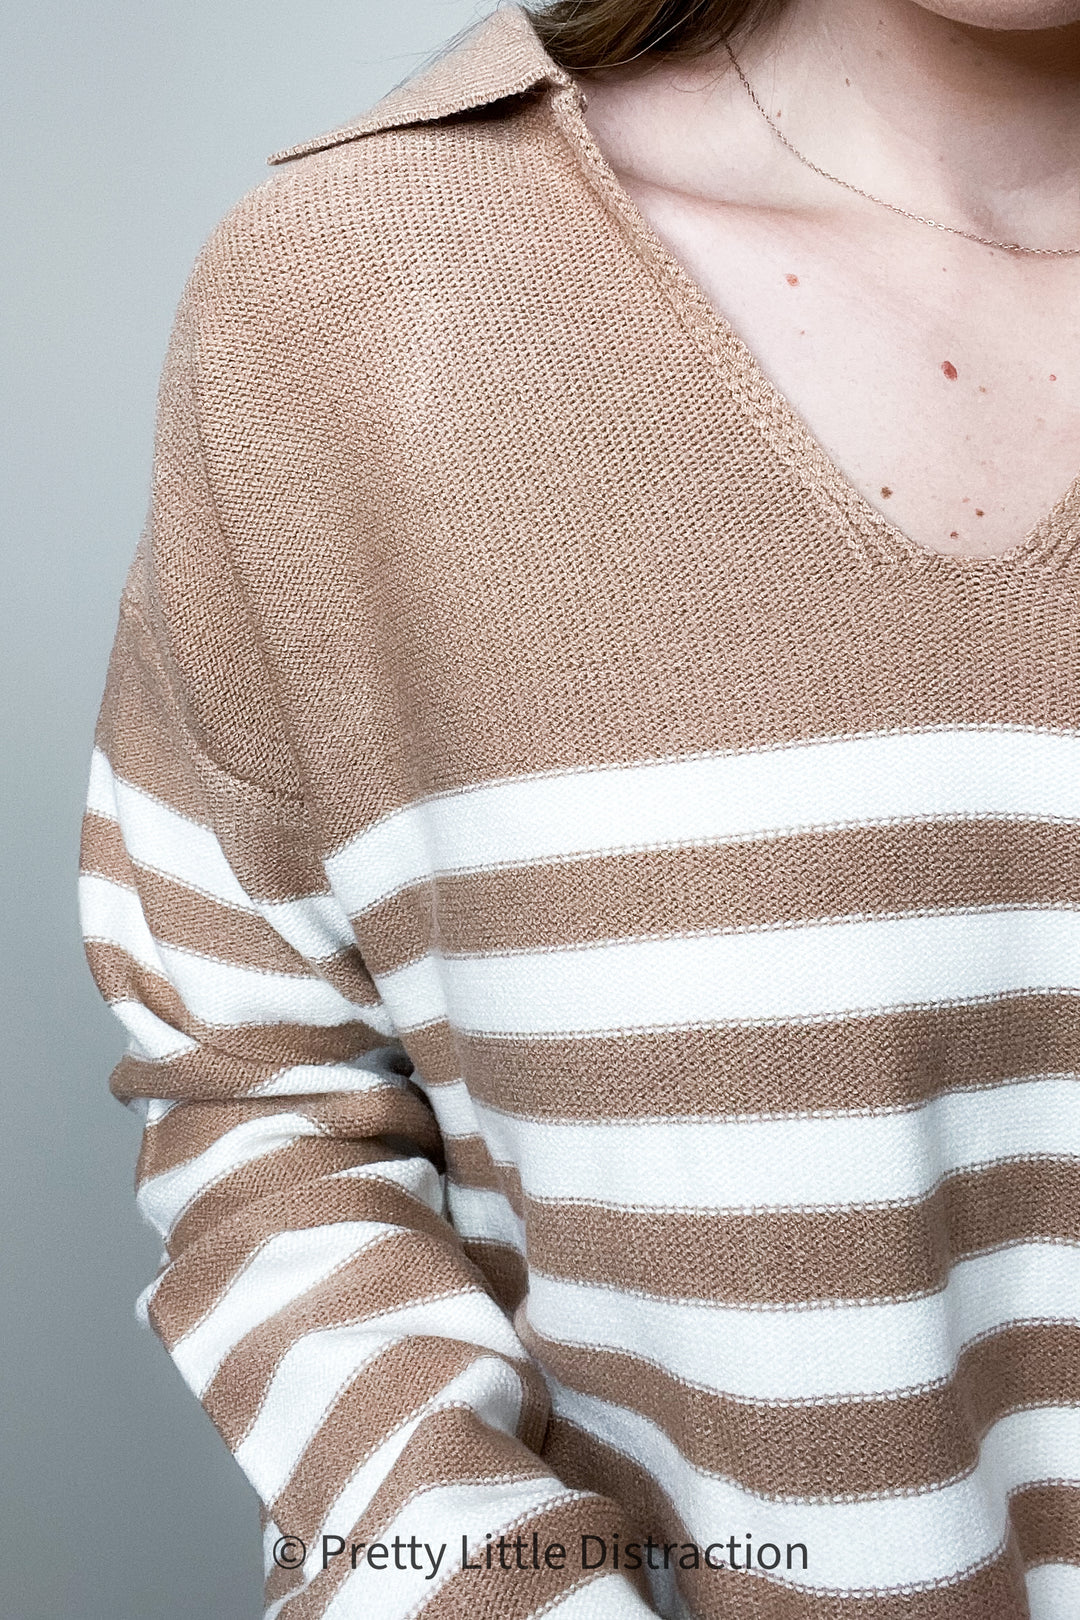 Memorable Moment Striped Sweater